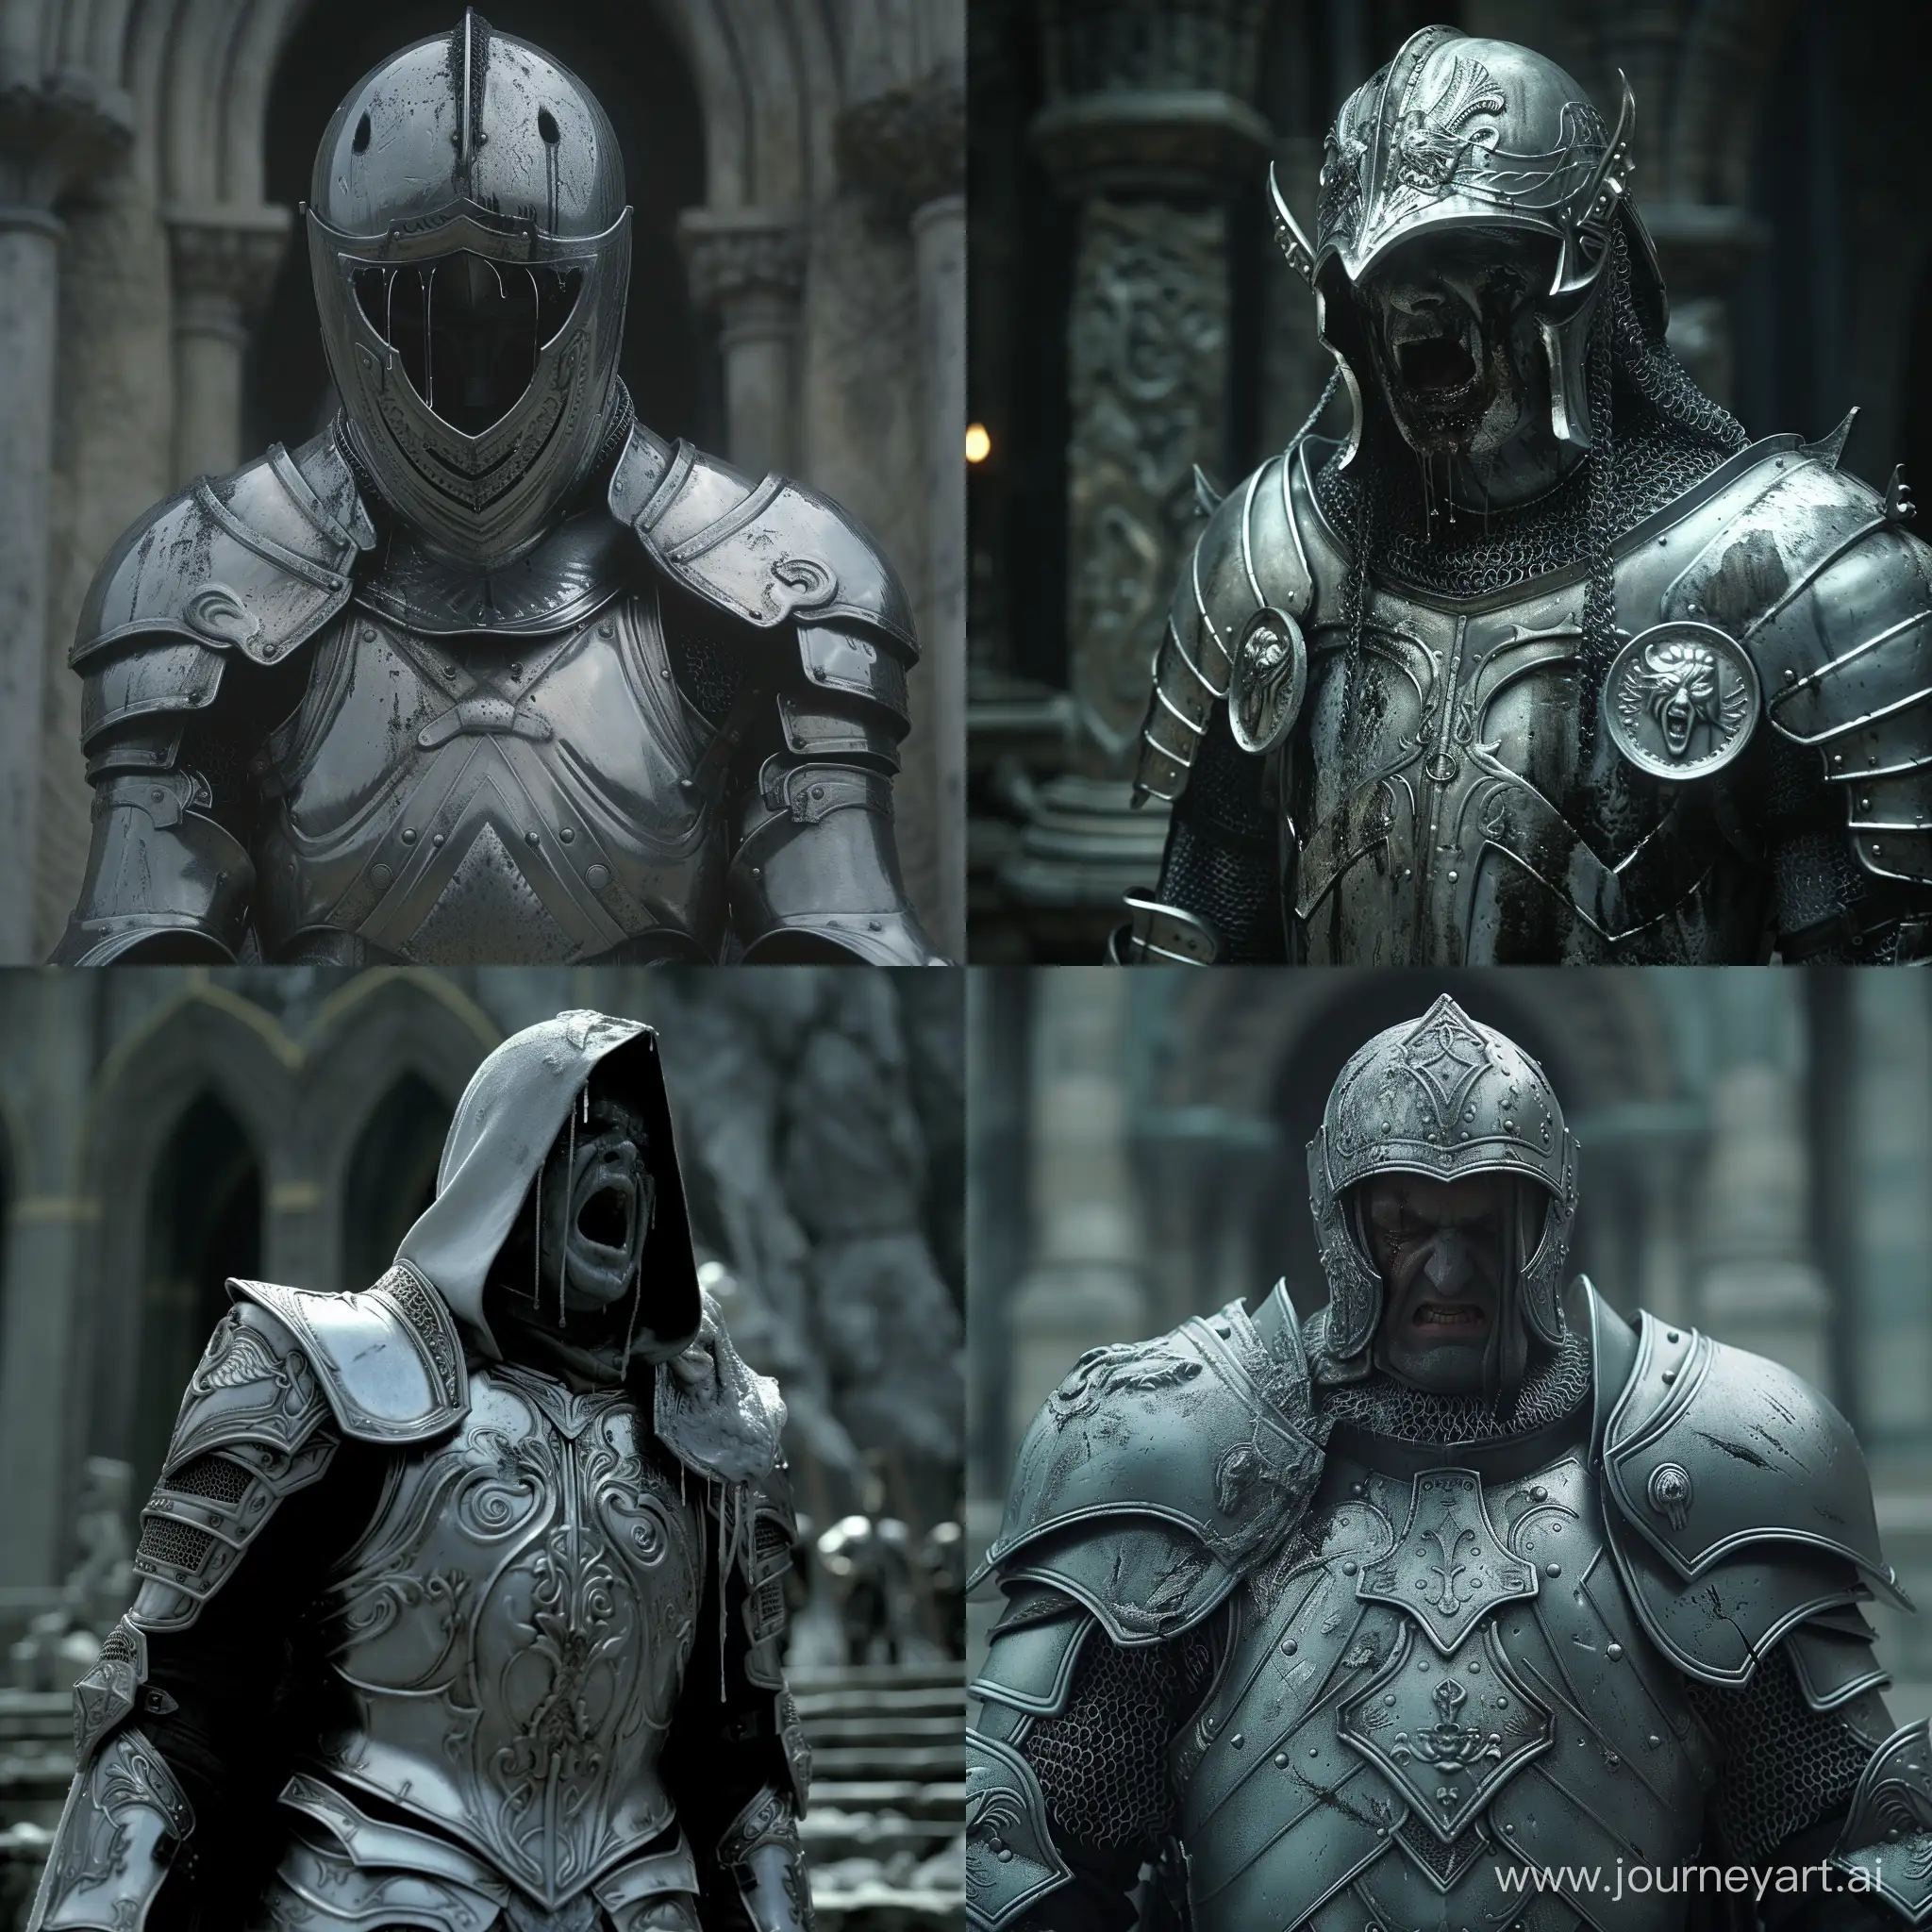 Dark-Fantasy-Silver-Armored-Guard-with-Weeping-Helmet